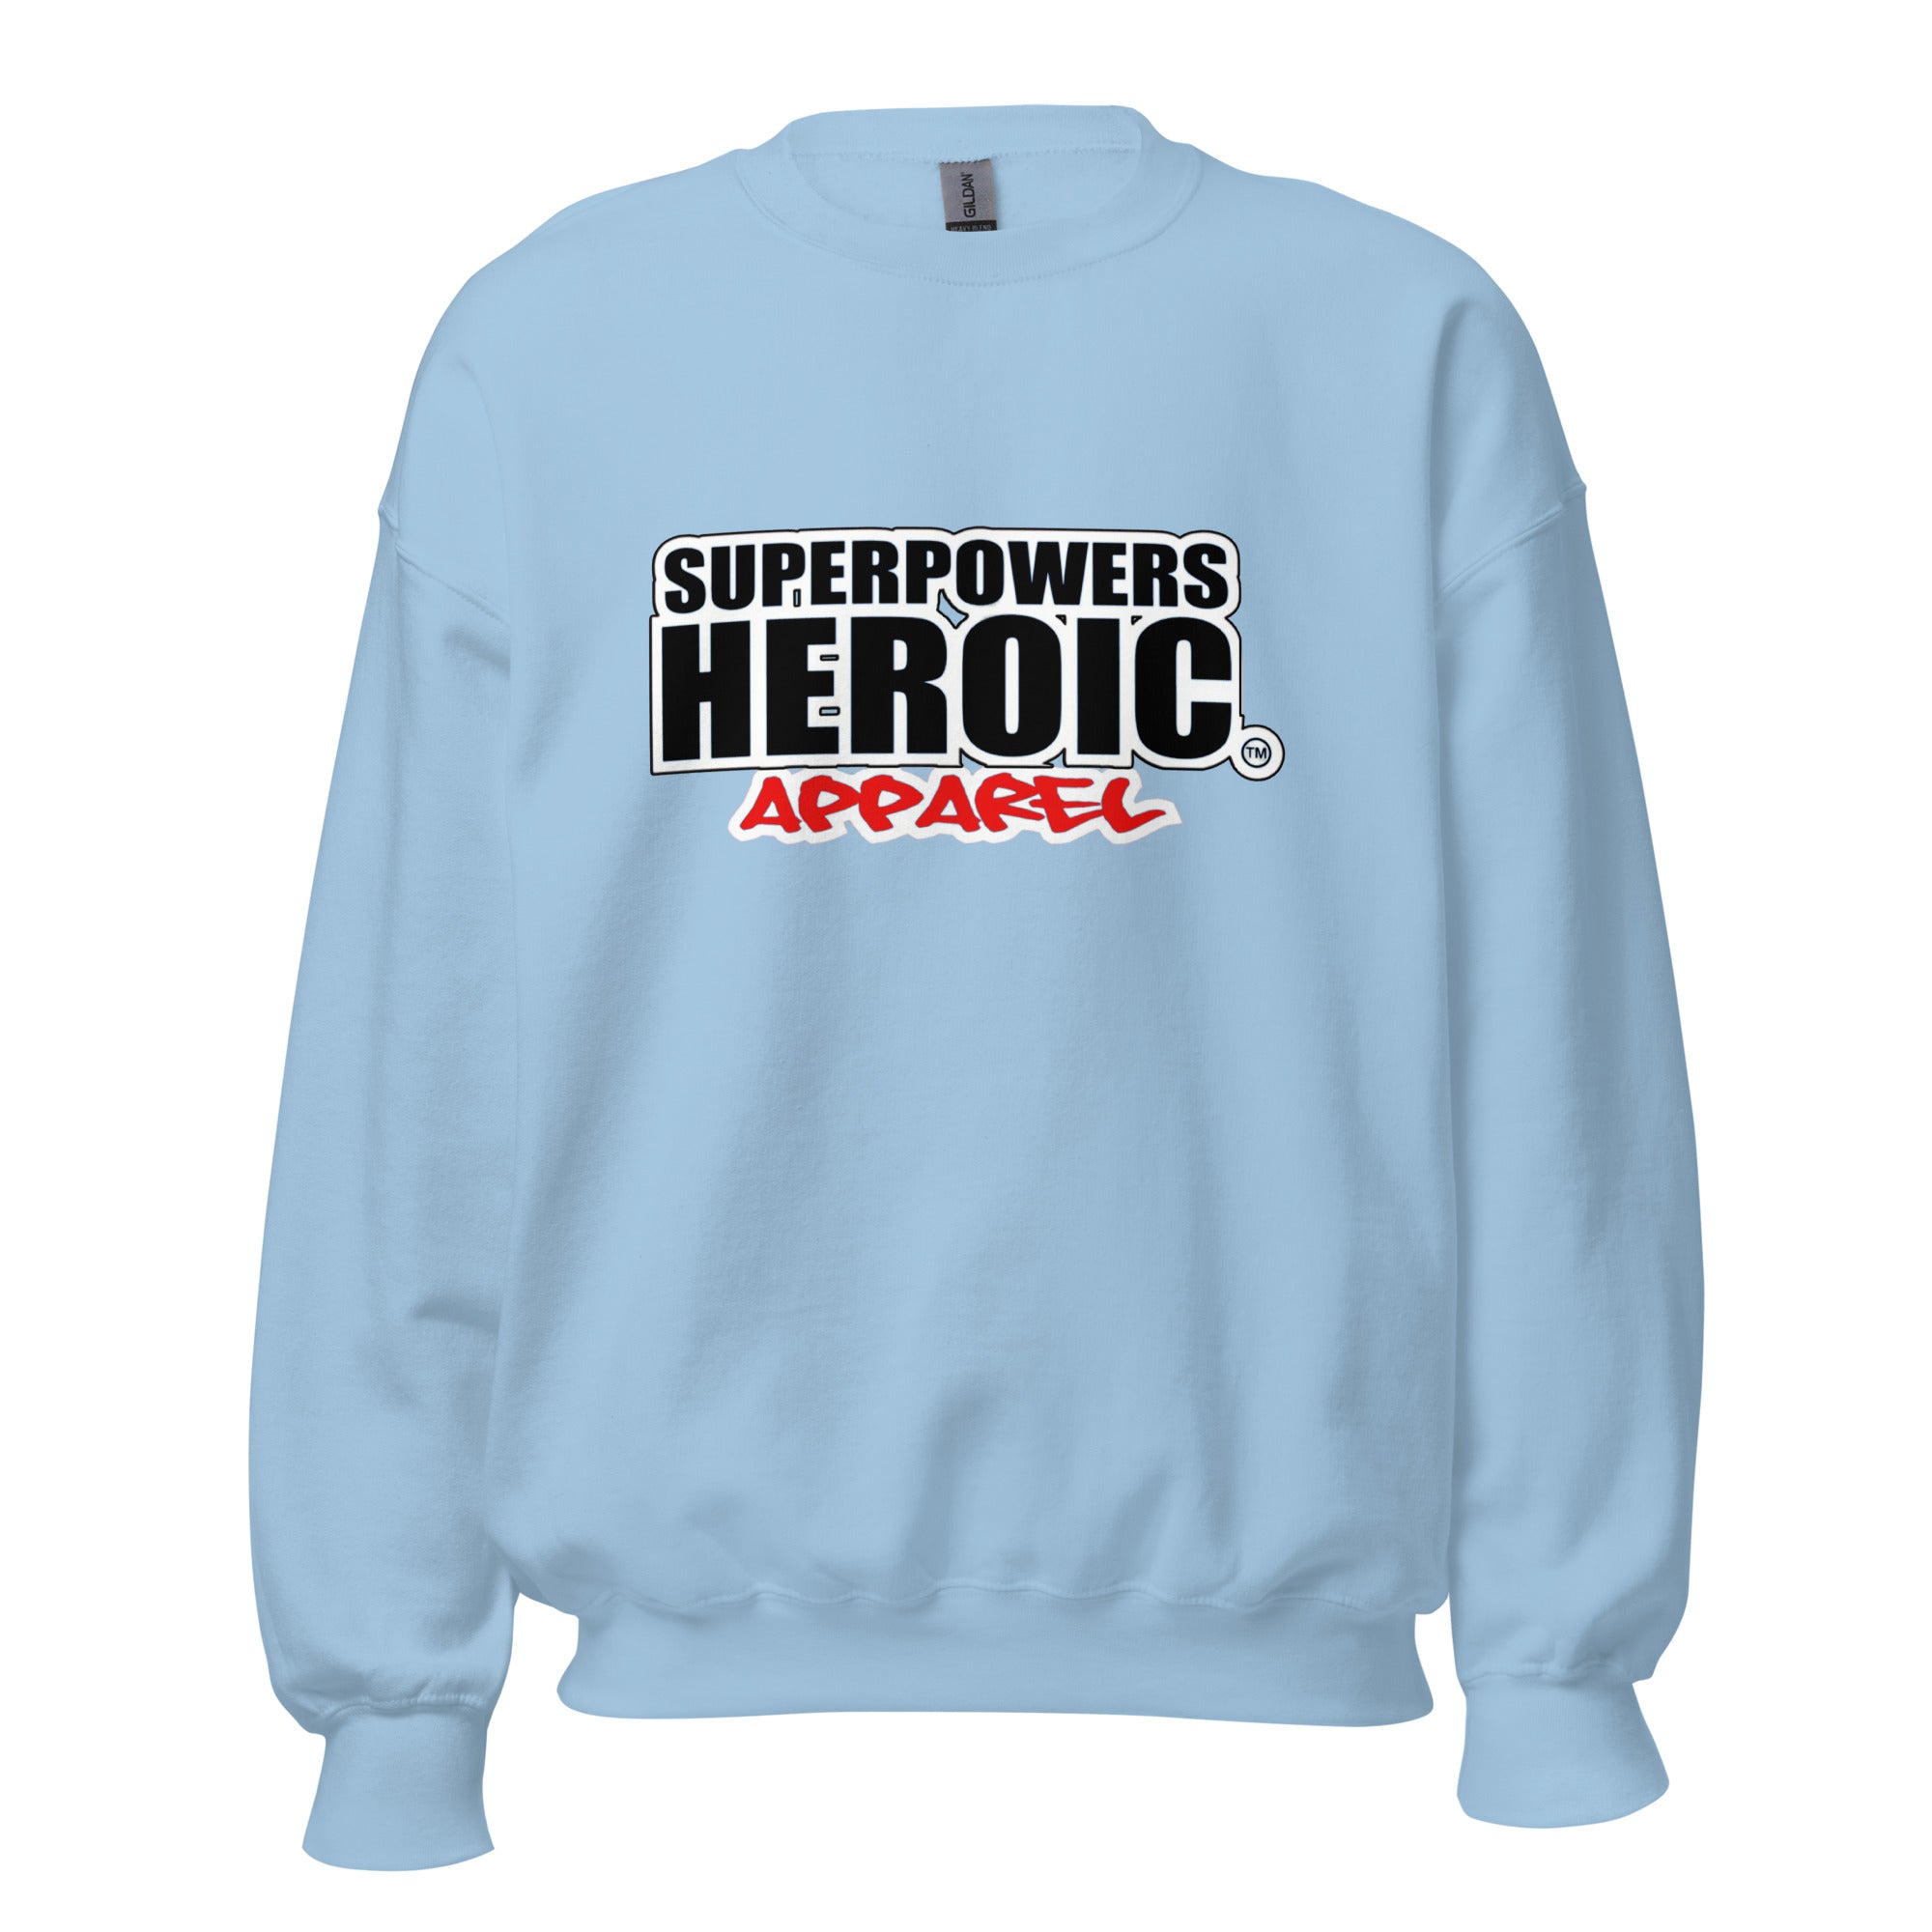 SUPERPOWERS HEROIC APPAREL (B) - SUPERPOWERS HEROIC APPAREL